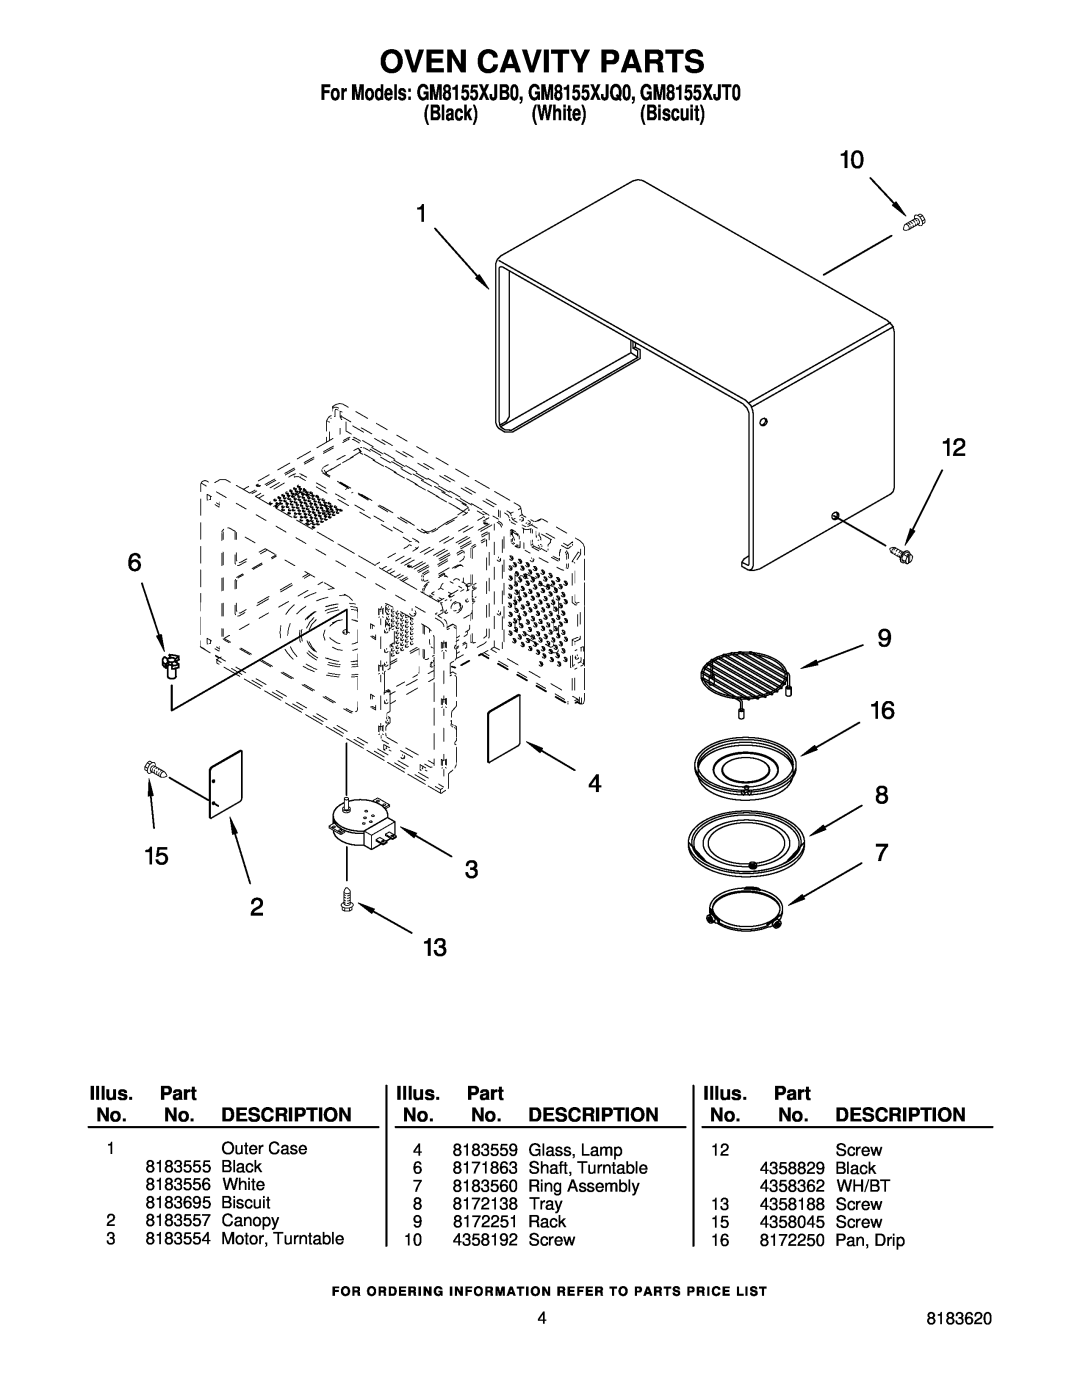 Whirlpool manual Oven Cavity Parts, Illus. Part No. No. DESCRIPTION, For Models GM8155XJB0, GM8155XJQ0, GM8155XJT0 